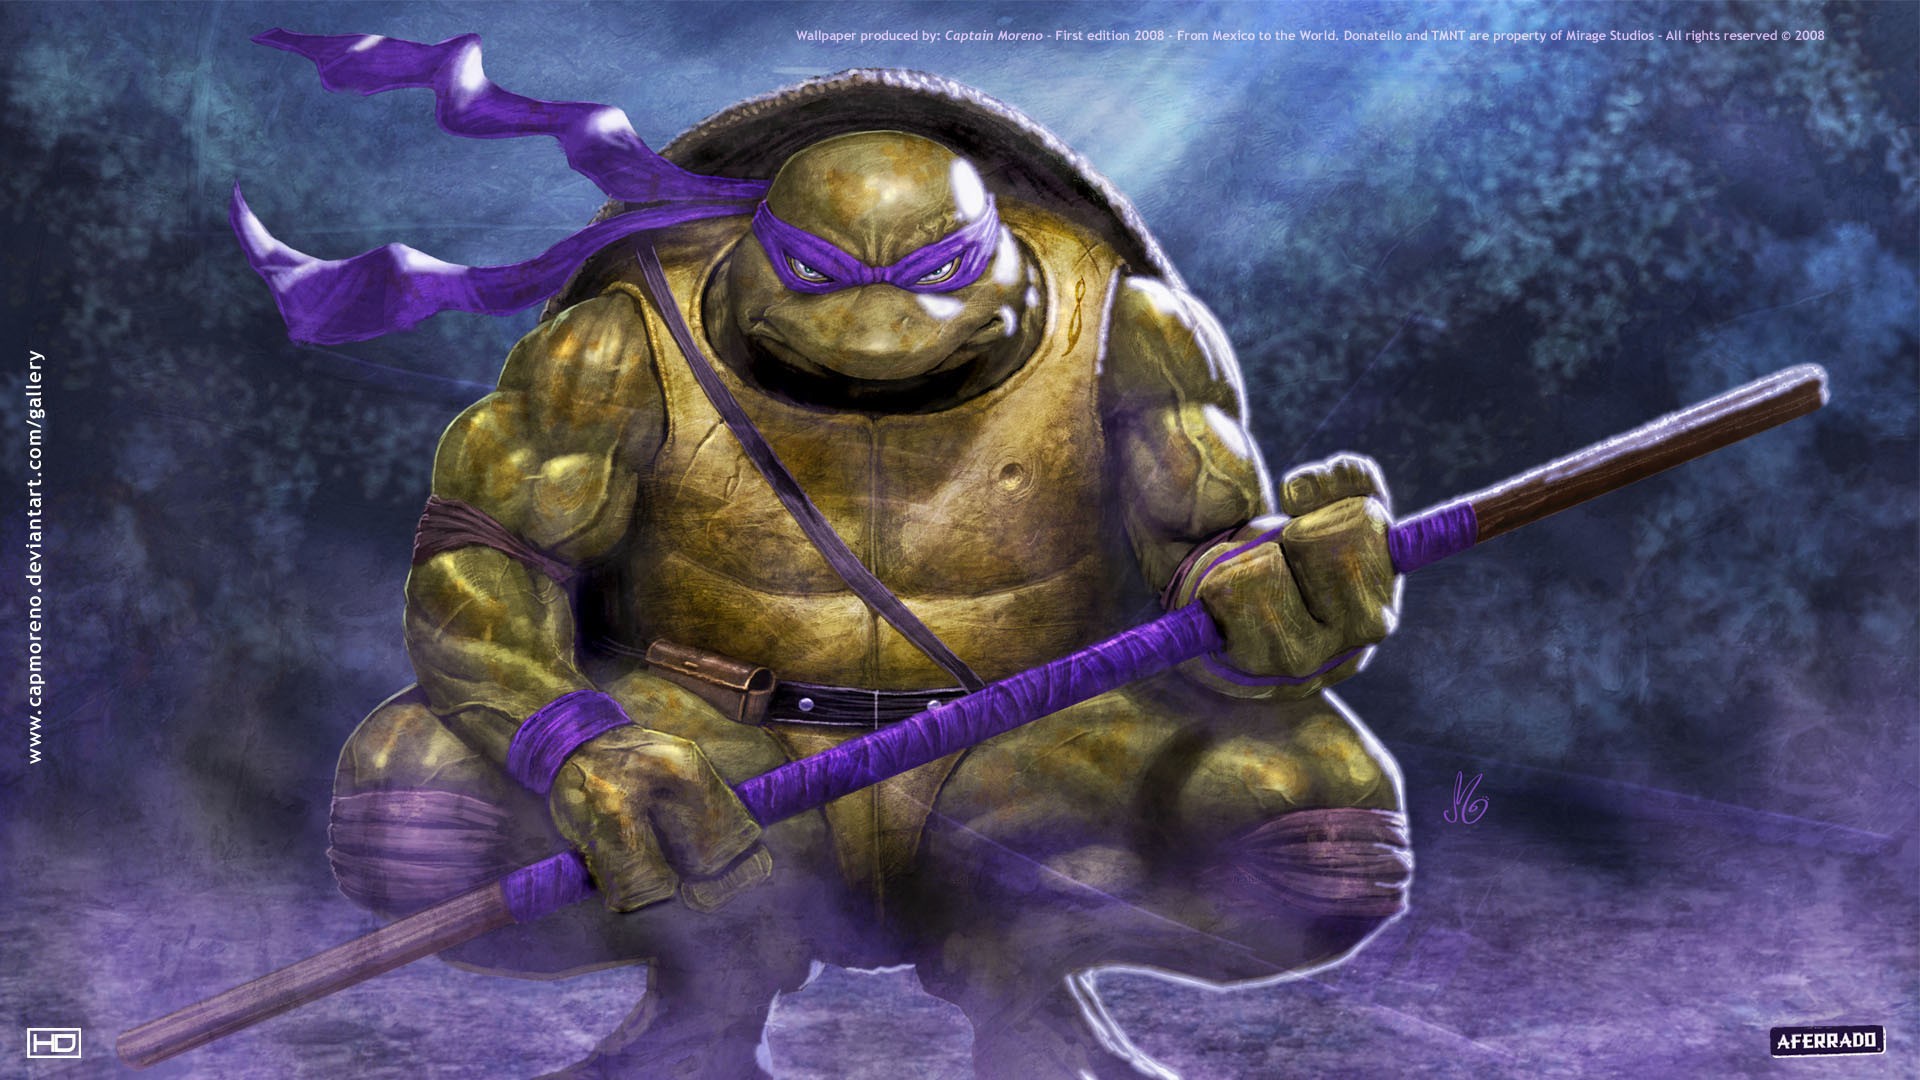 General 1920x1080 Teenage Mutant Ninja Turtles warrior purple squatting artwork DeviantArt mask 2008 (Year)